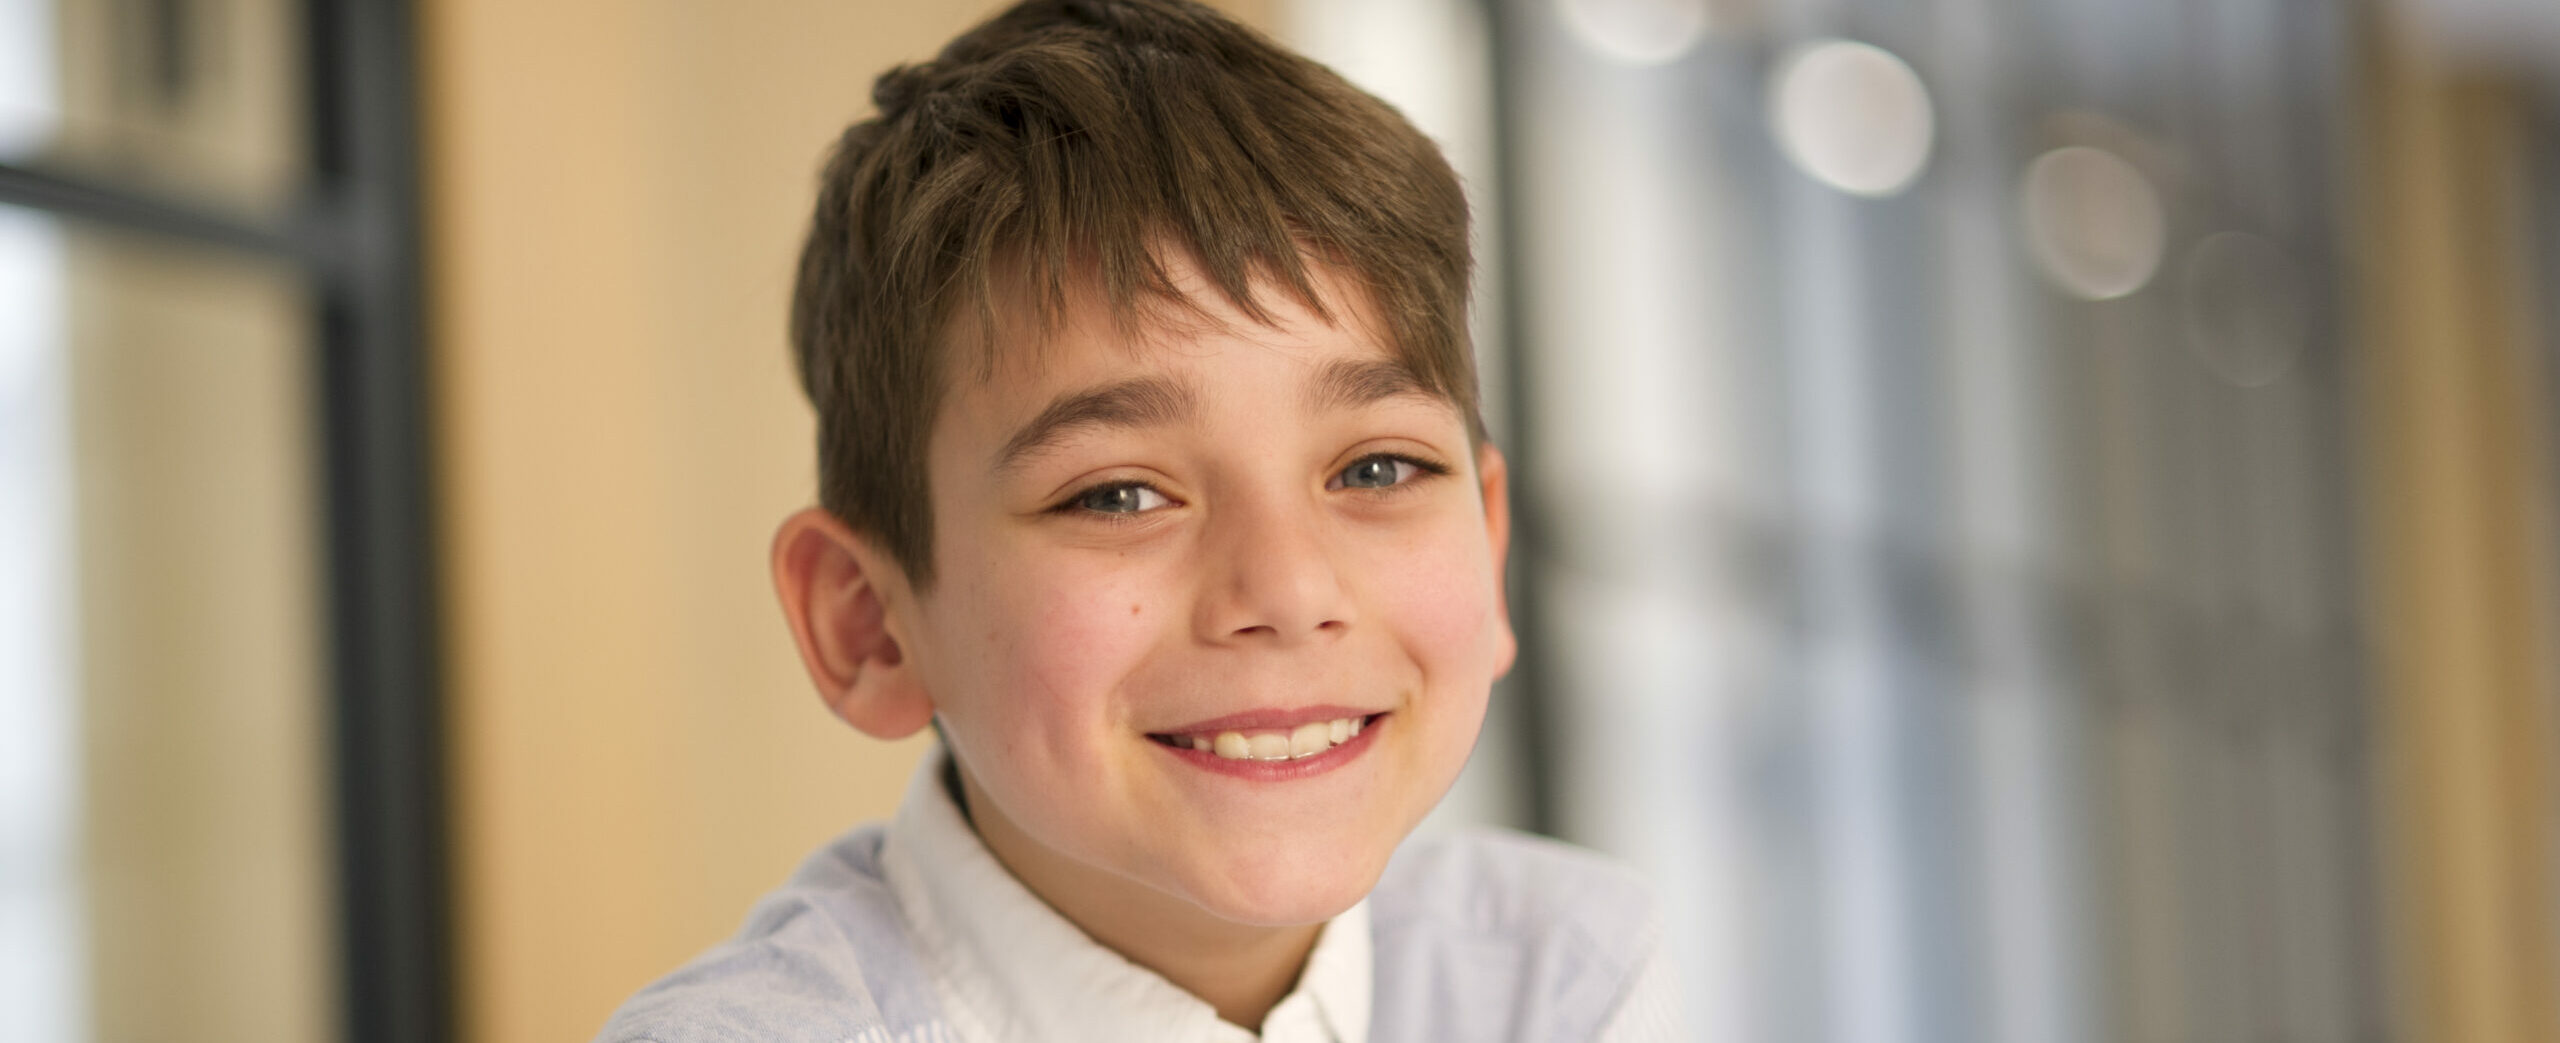 Smiling little boy with temporomandibular joint disease